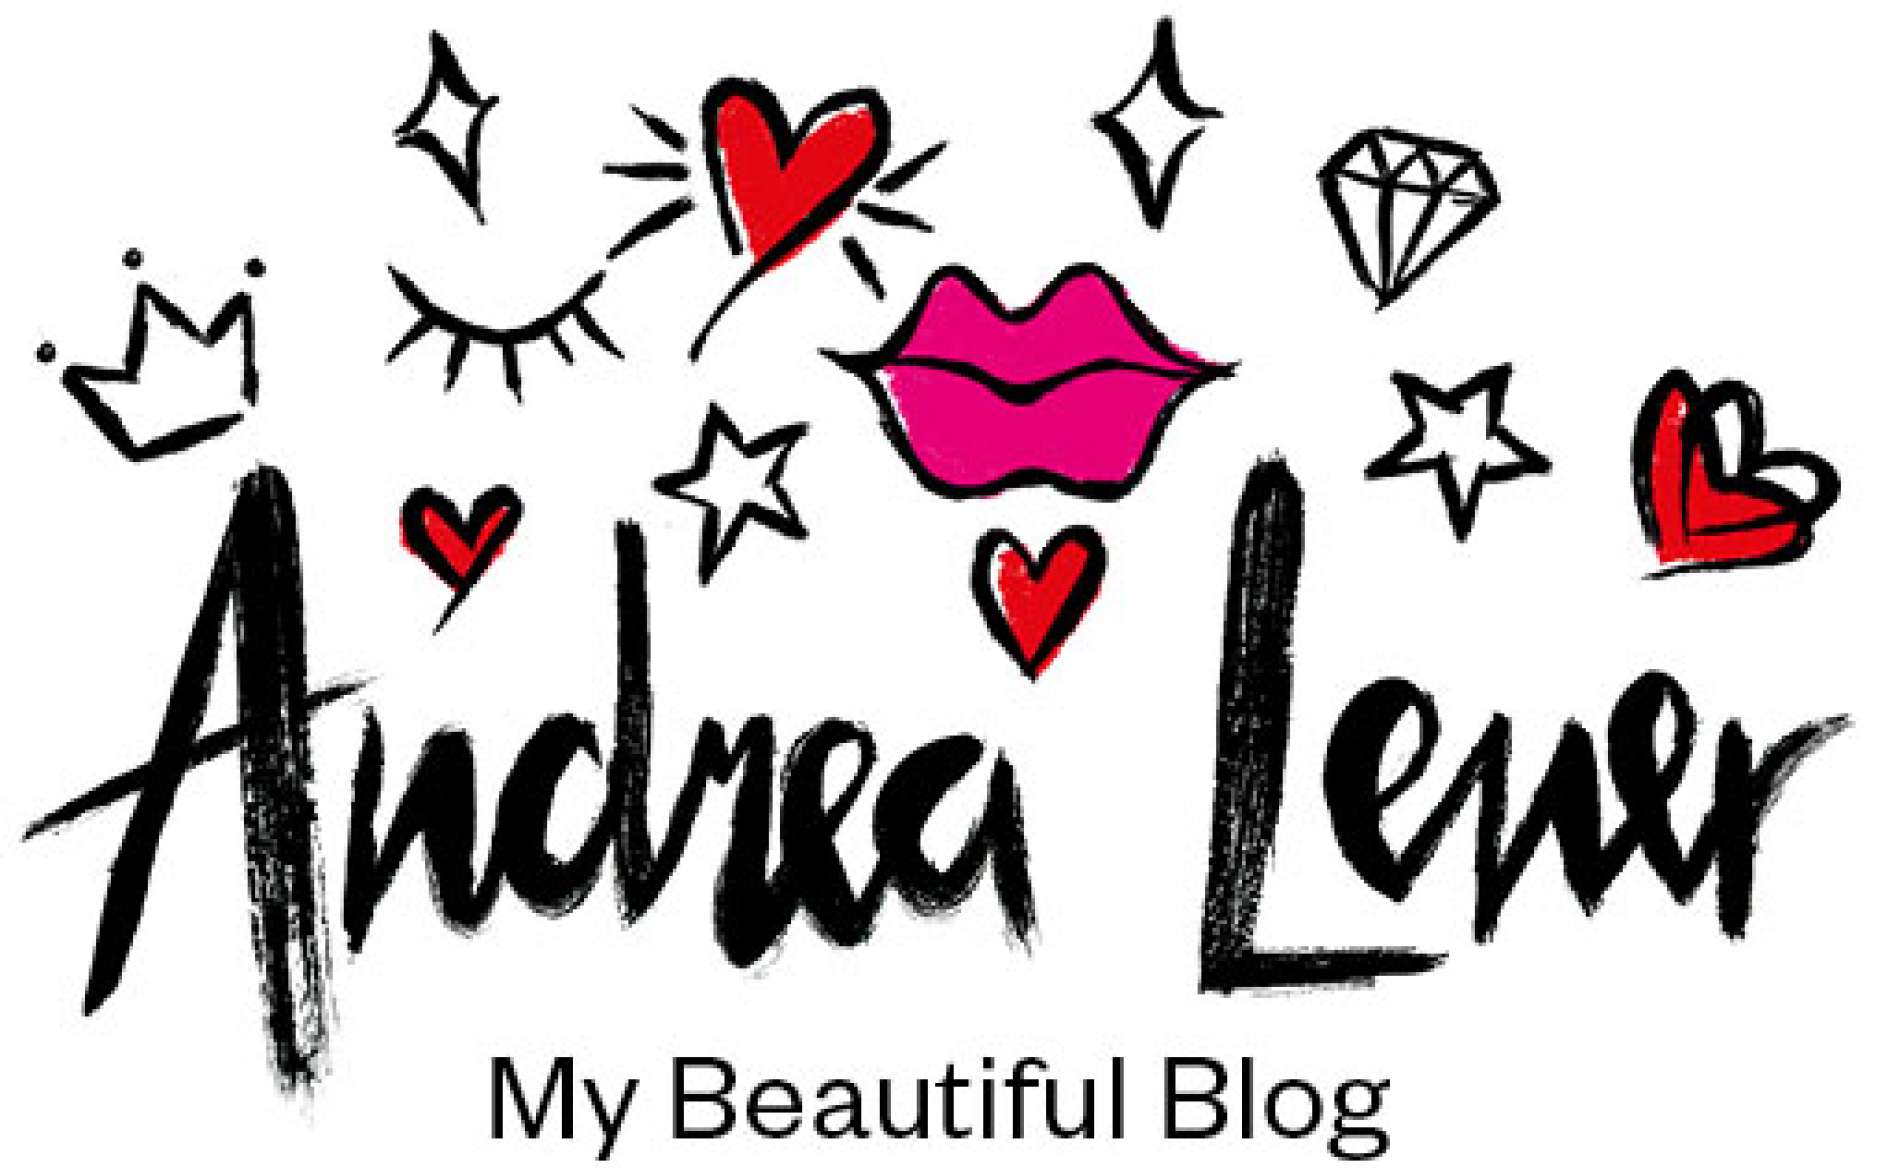 My Beautiful Blog